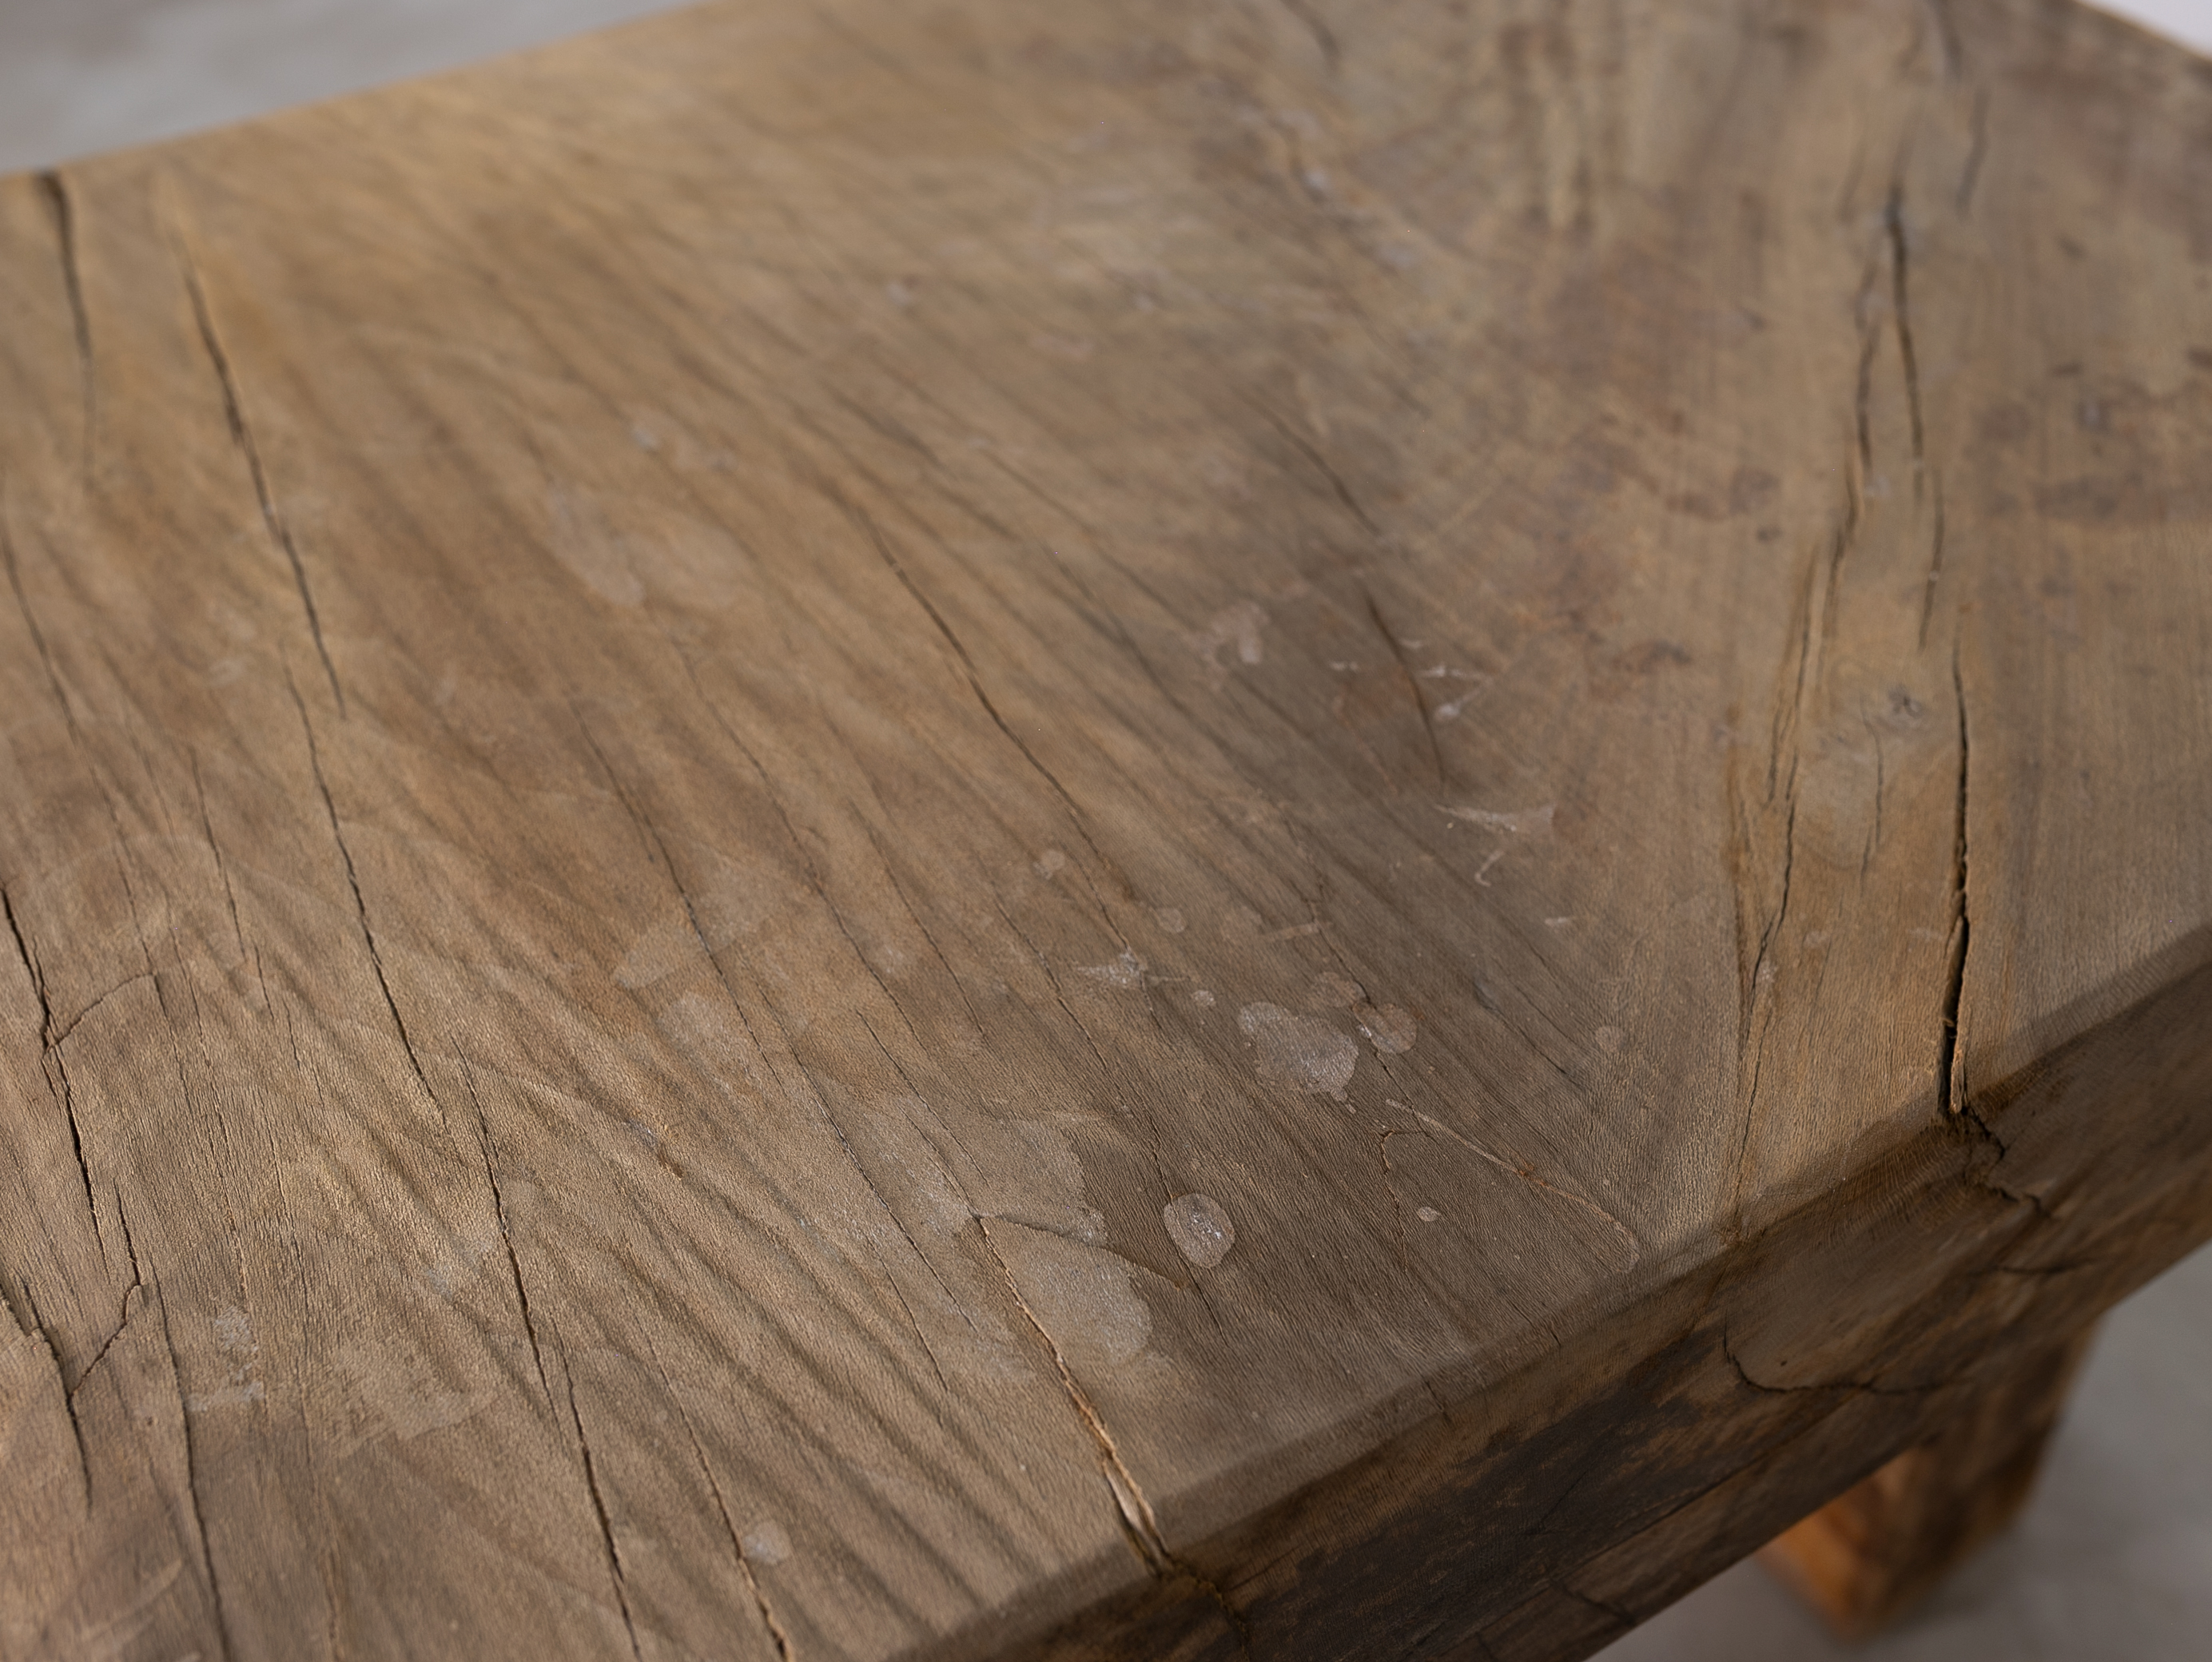 Wooden primitive table I プリミィティブテーブル